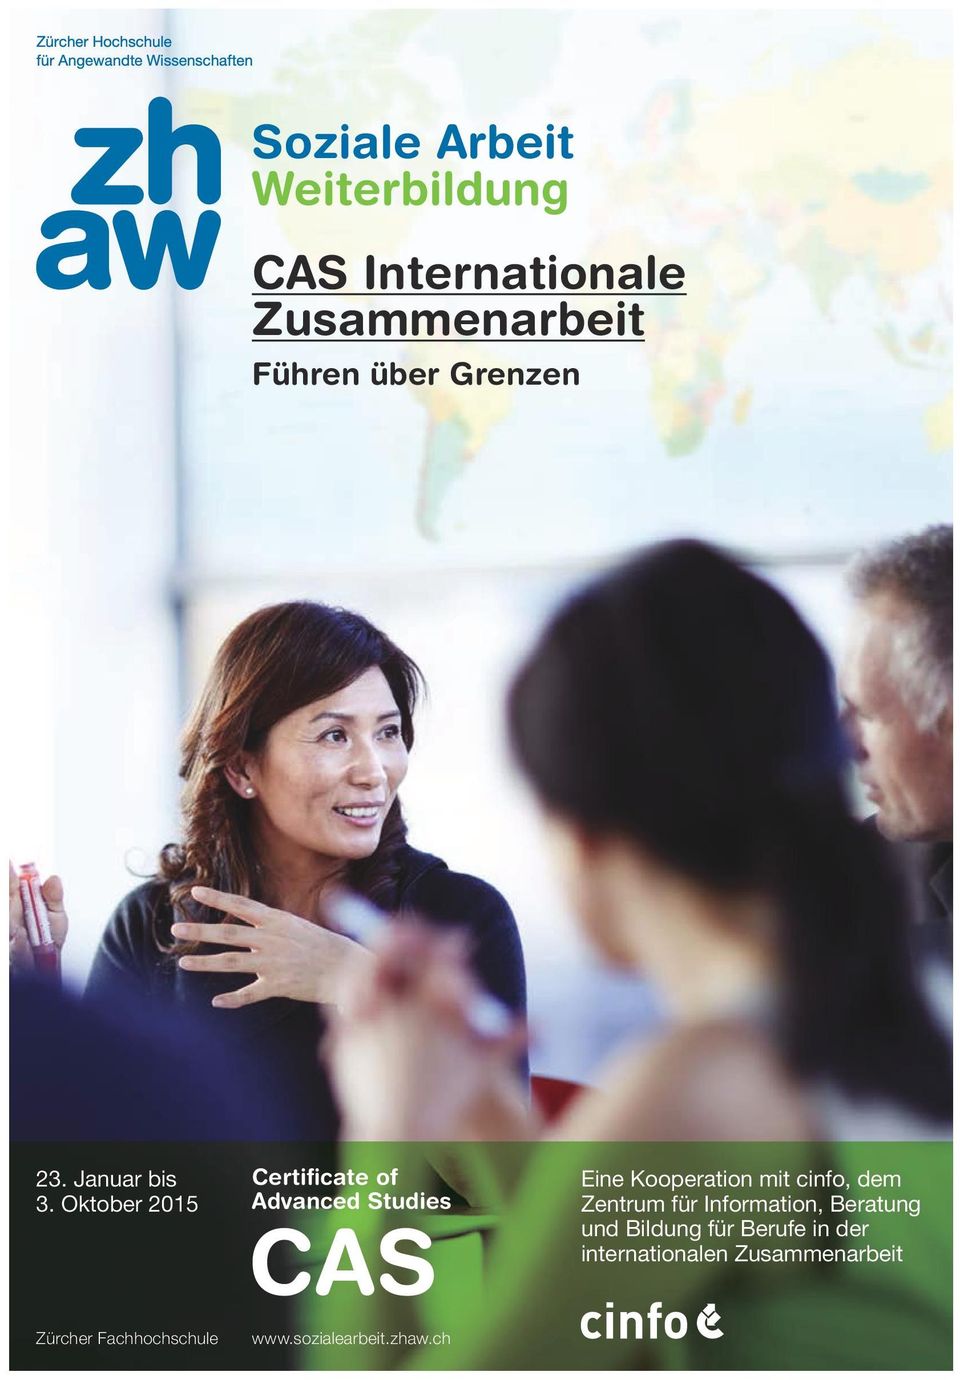 Oktober 2015 Zürcher Fachhochschule Certificate of Advanced Studies CAS www.